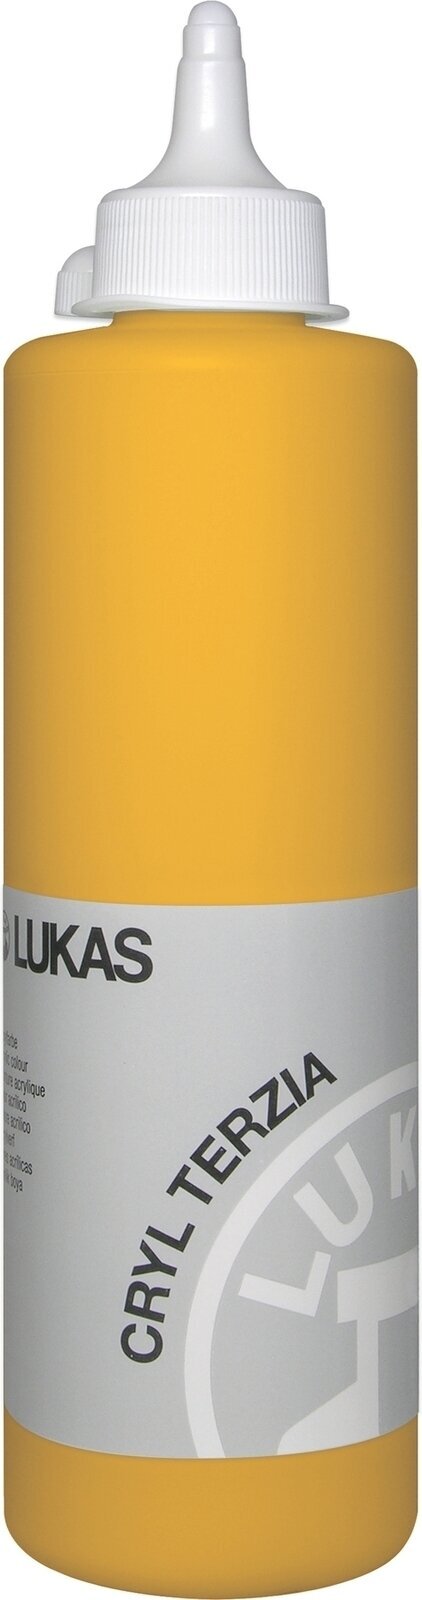 Acrylic Paint Lukas Cryl Terzia Acrylic Paint 500 ml Indian Yellow